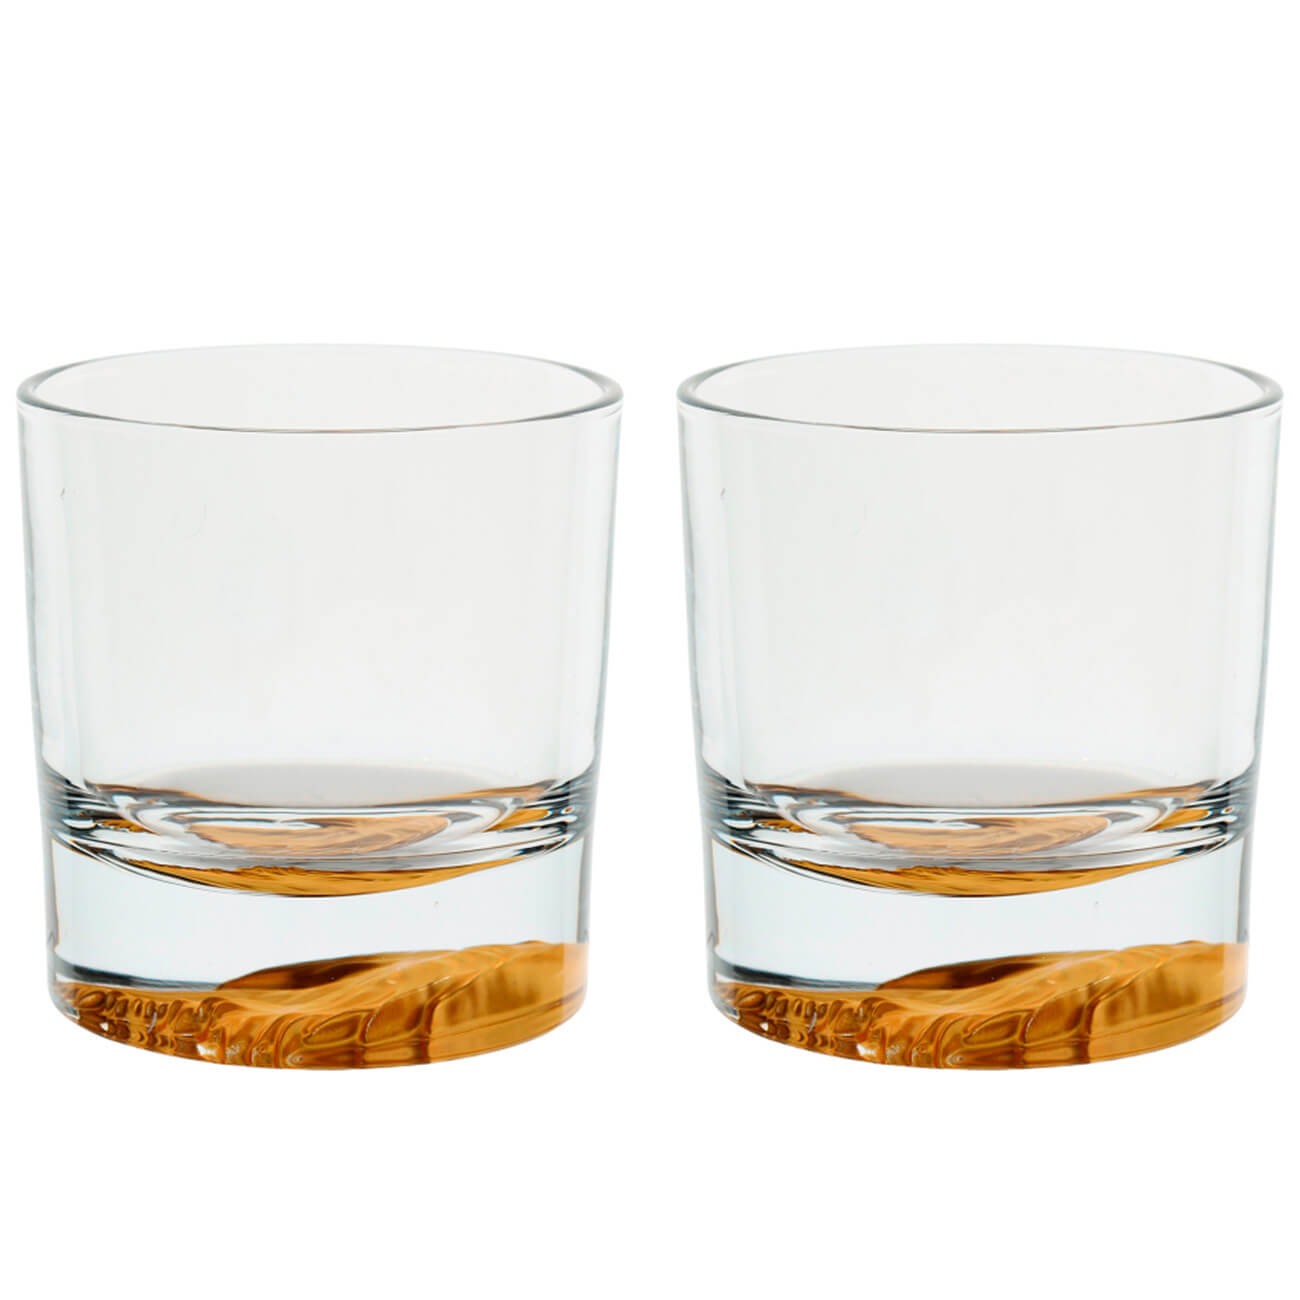 Стакан для виски, 300 мл, 2 шт, стекло, Орел, Elements набор для виски 2 перс 6 пр стаканы кубики стекло р мрамор zero